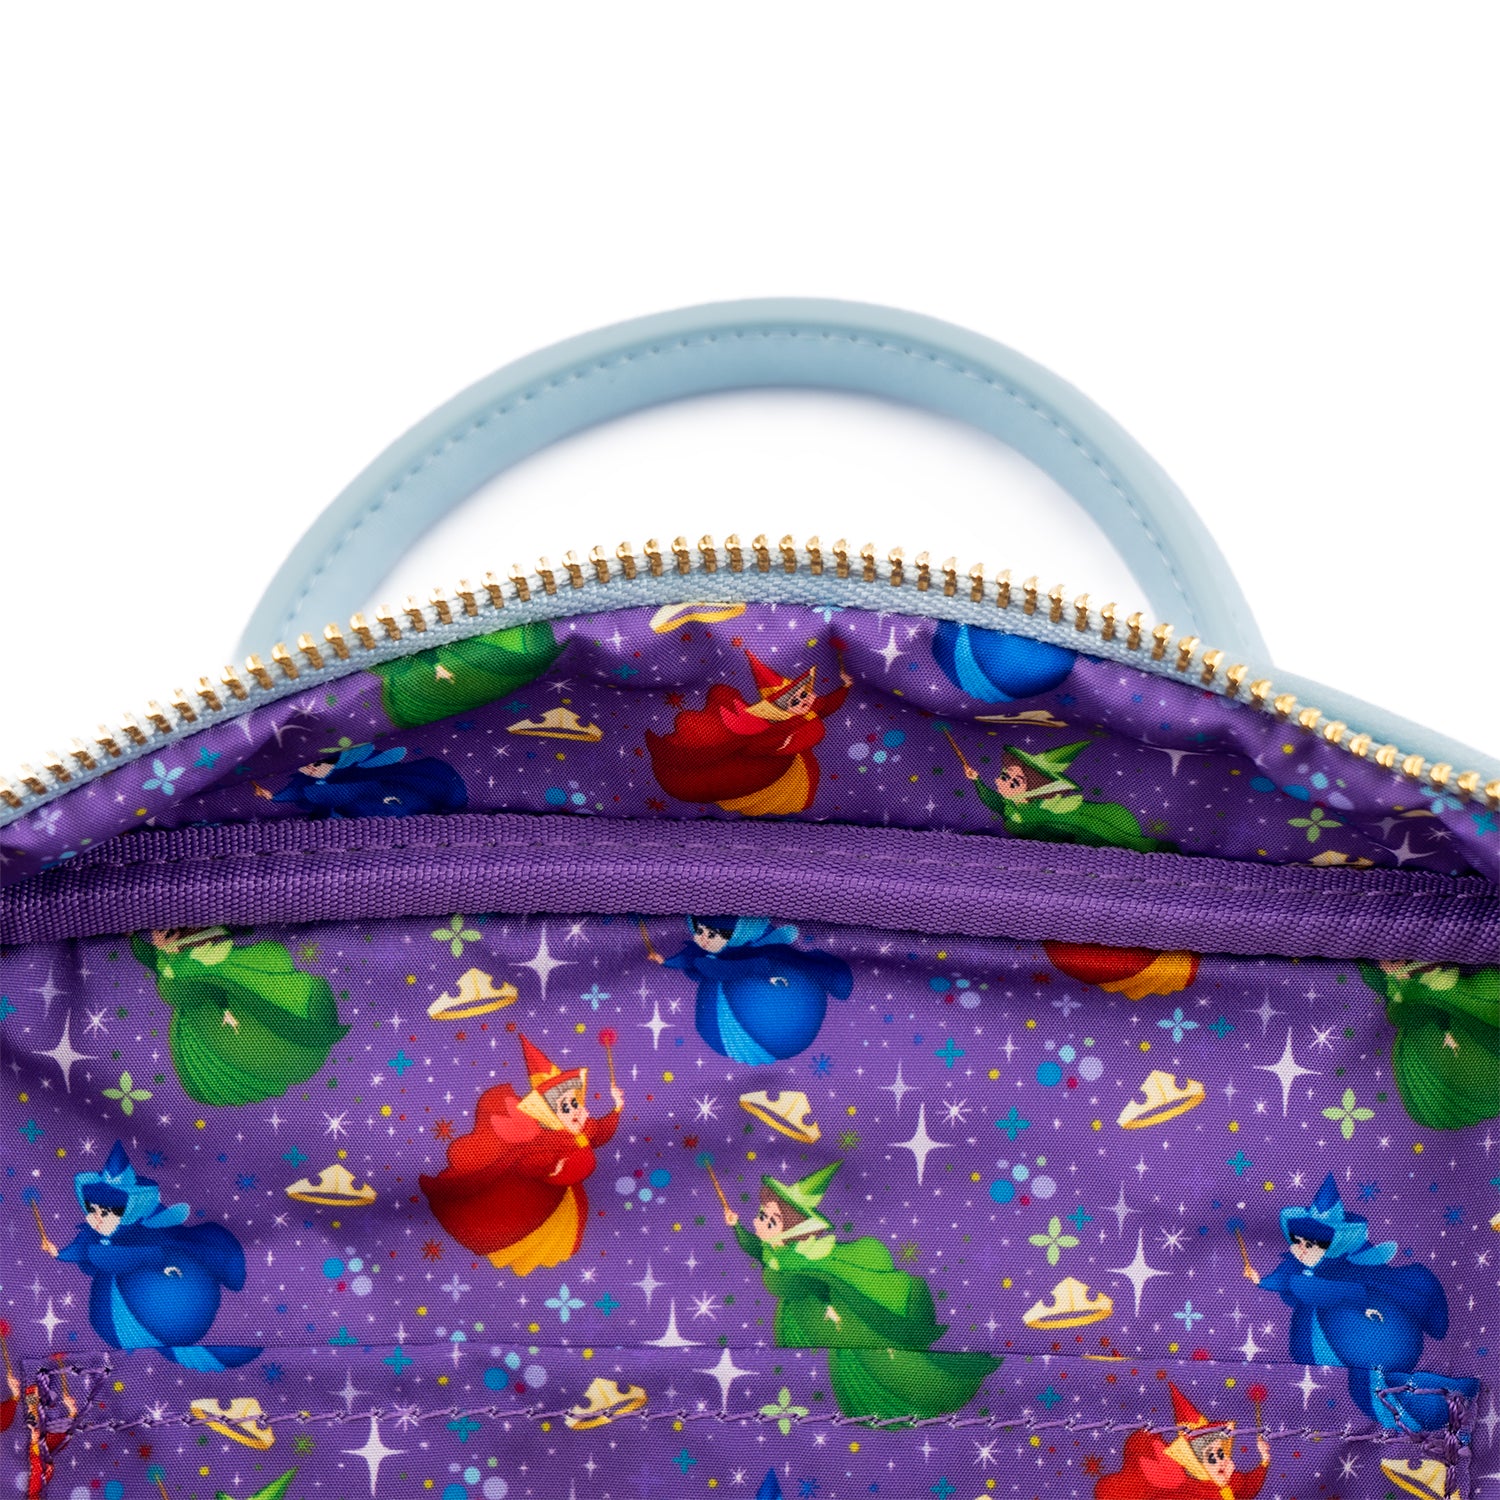 Loungefly Disney Frozen Princess Castle Crossbody Bag